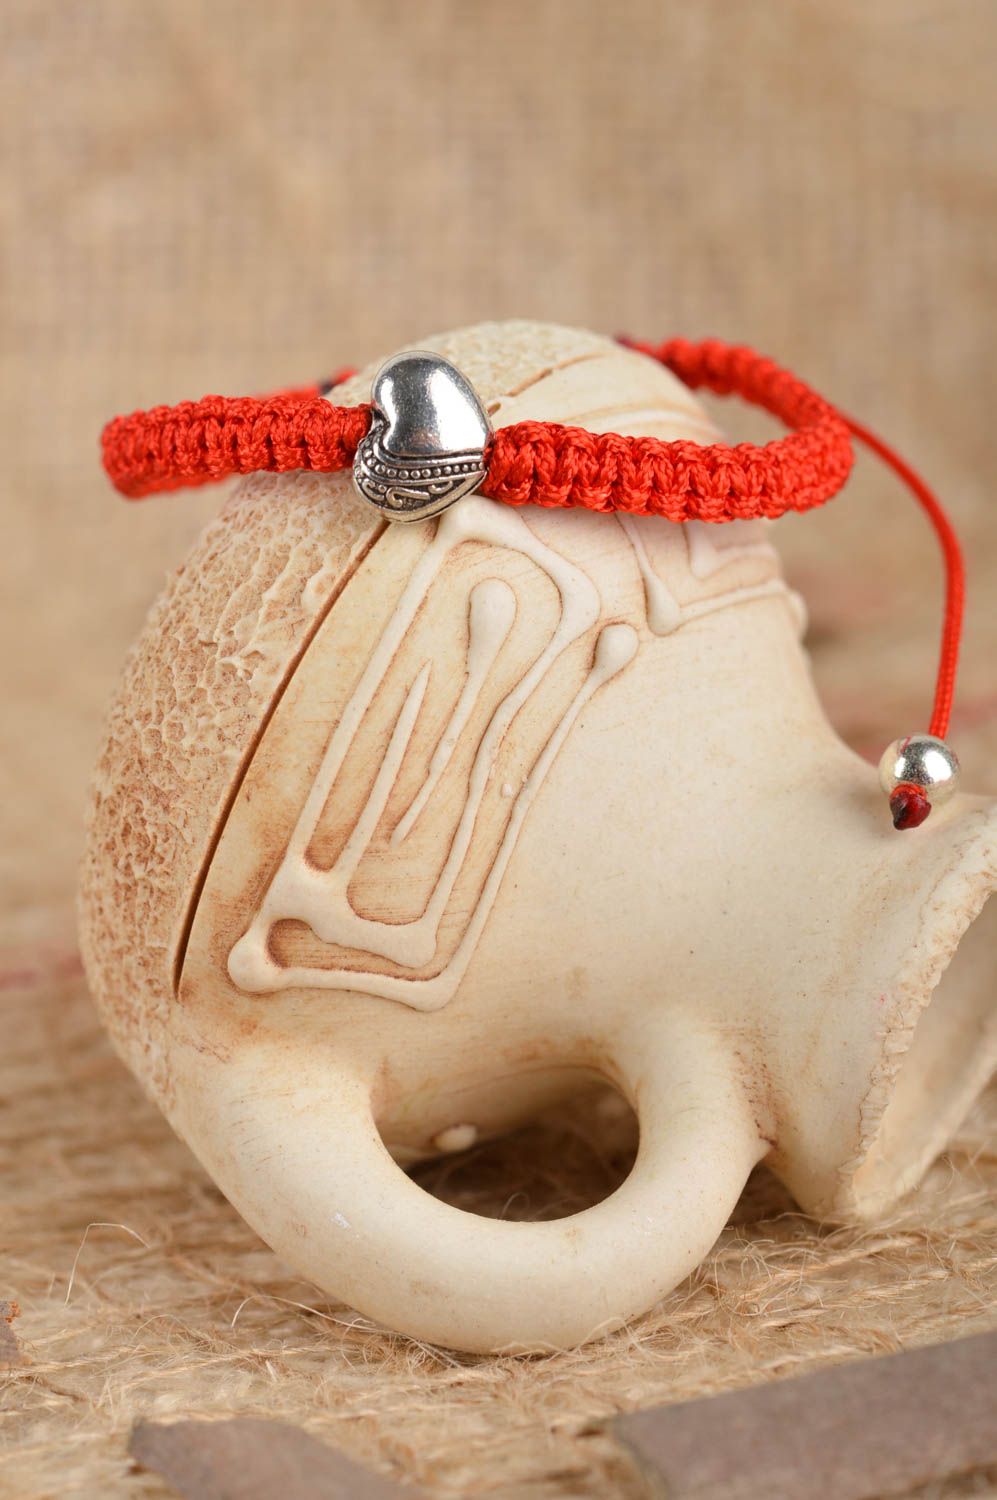 Unusual handmade friendship bracelet cool textile bracelet costume jewelry photo 1